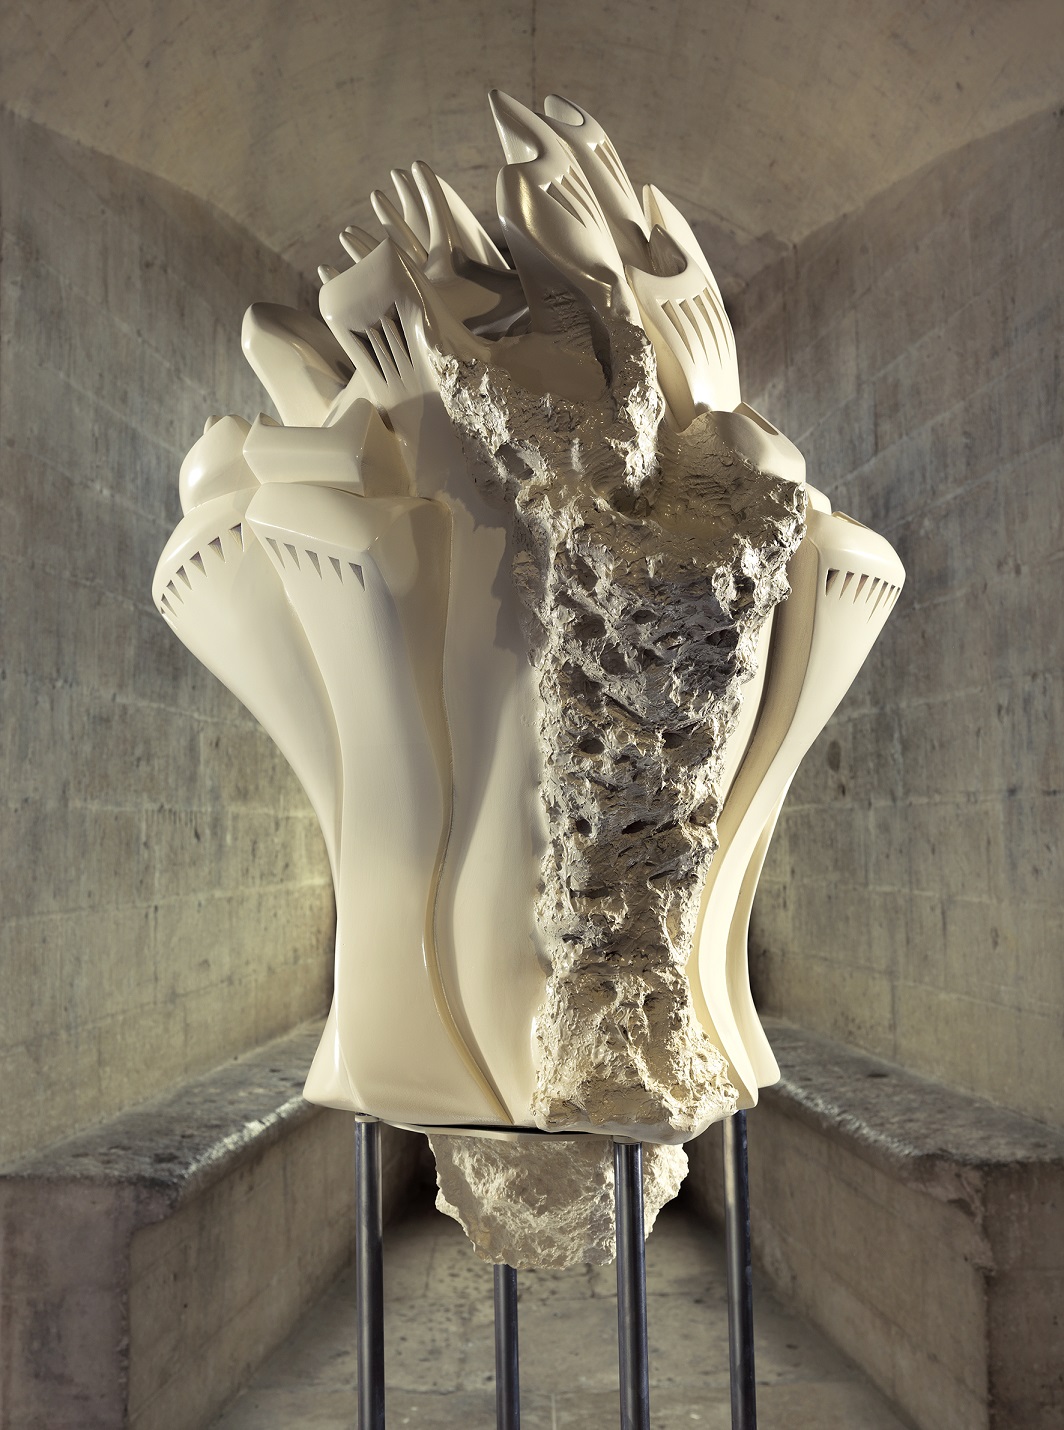 Sculpture Chateau Coeur